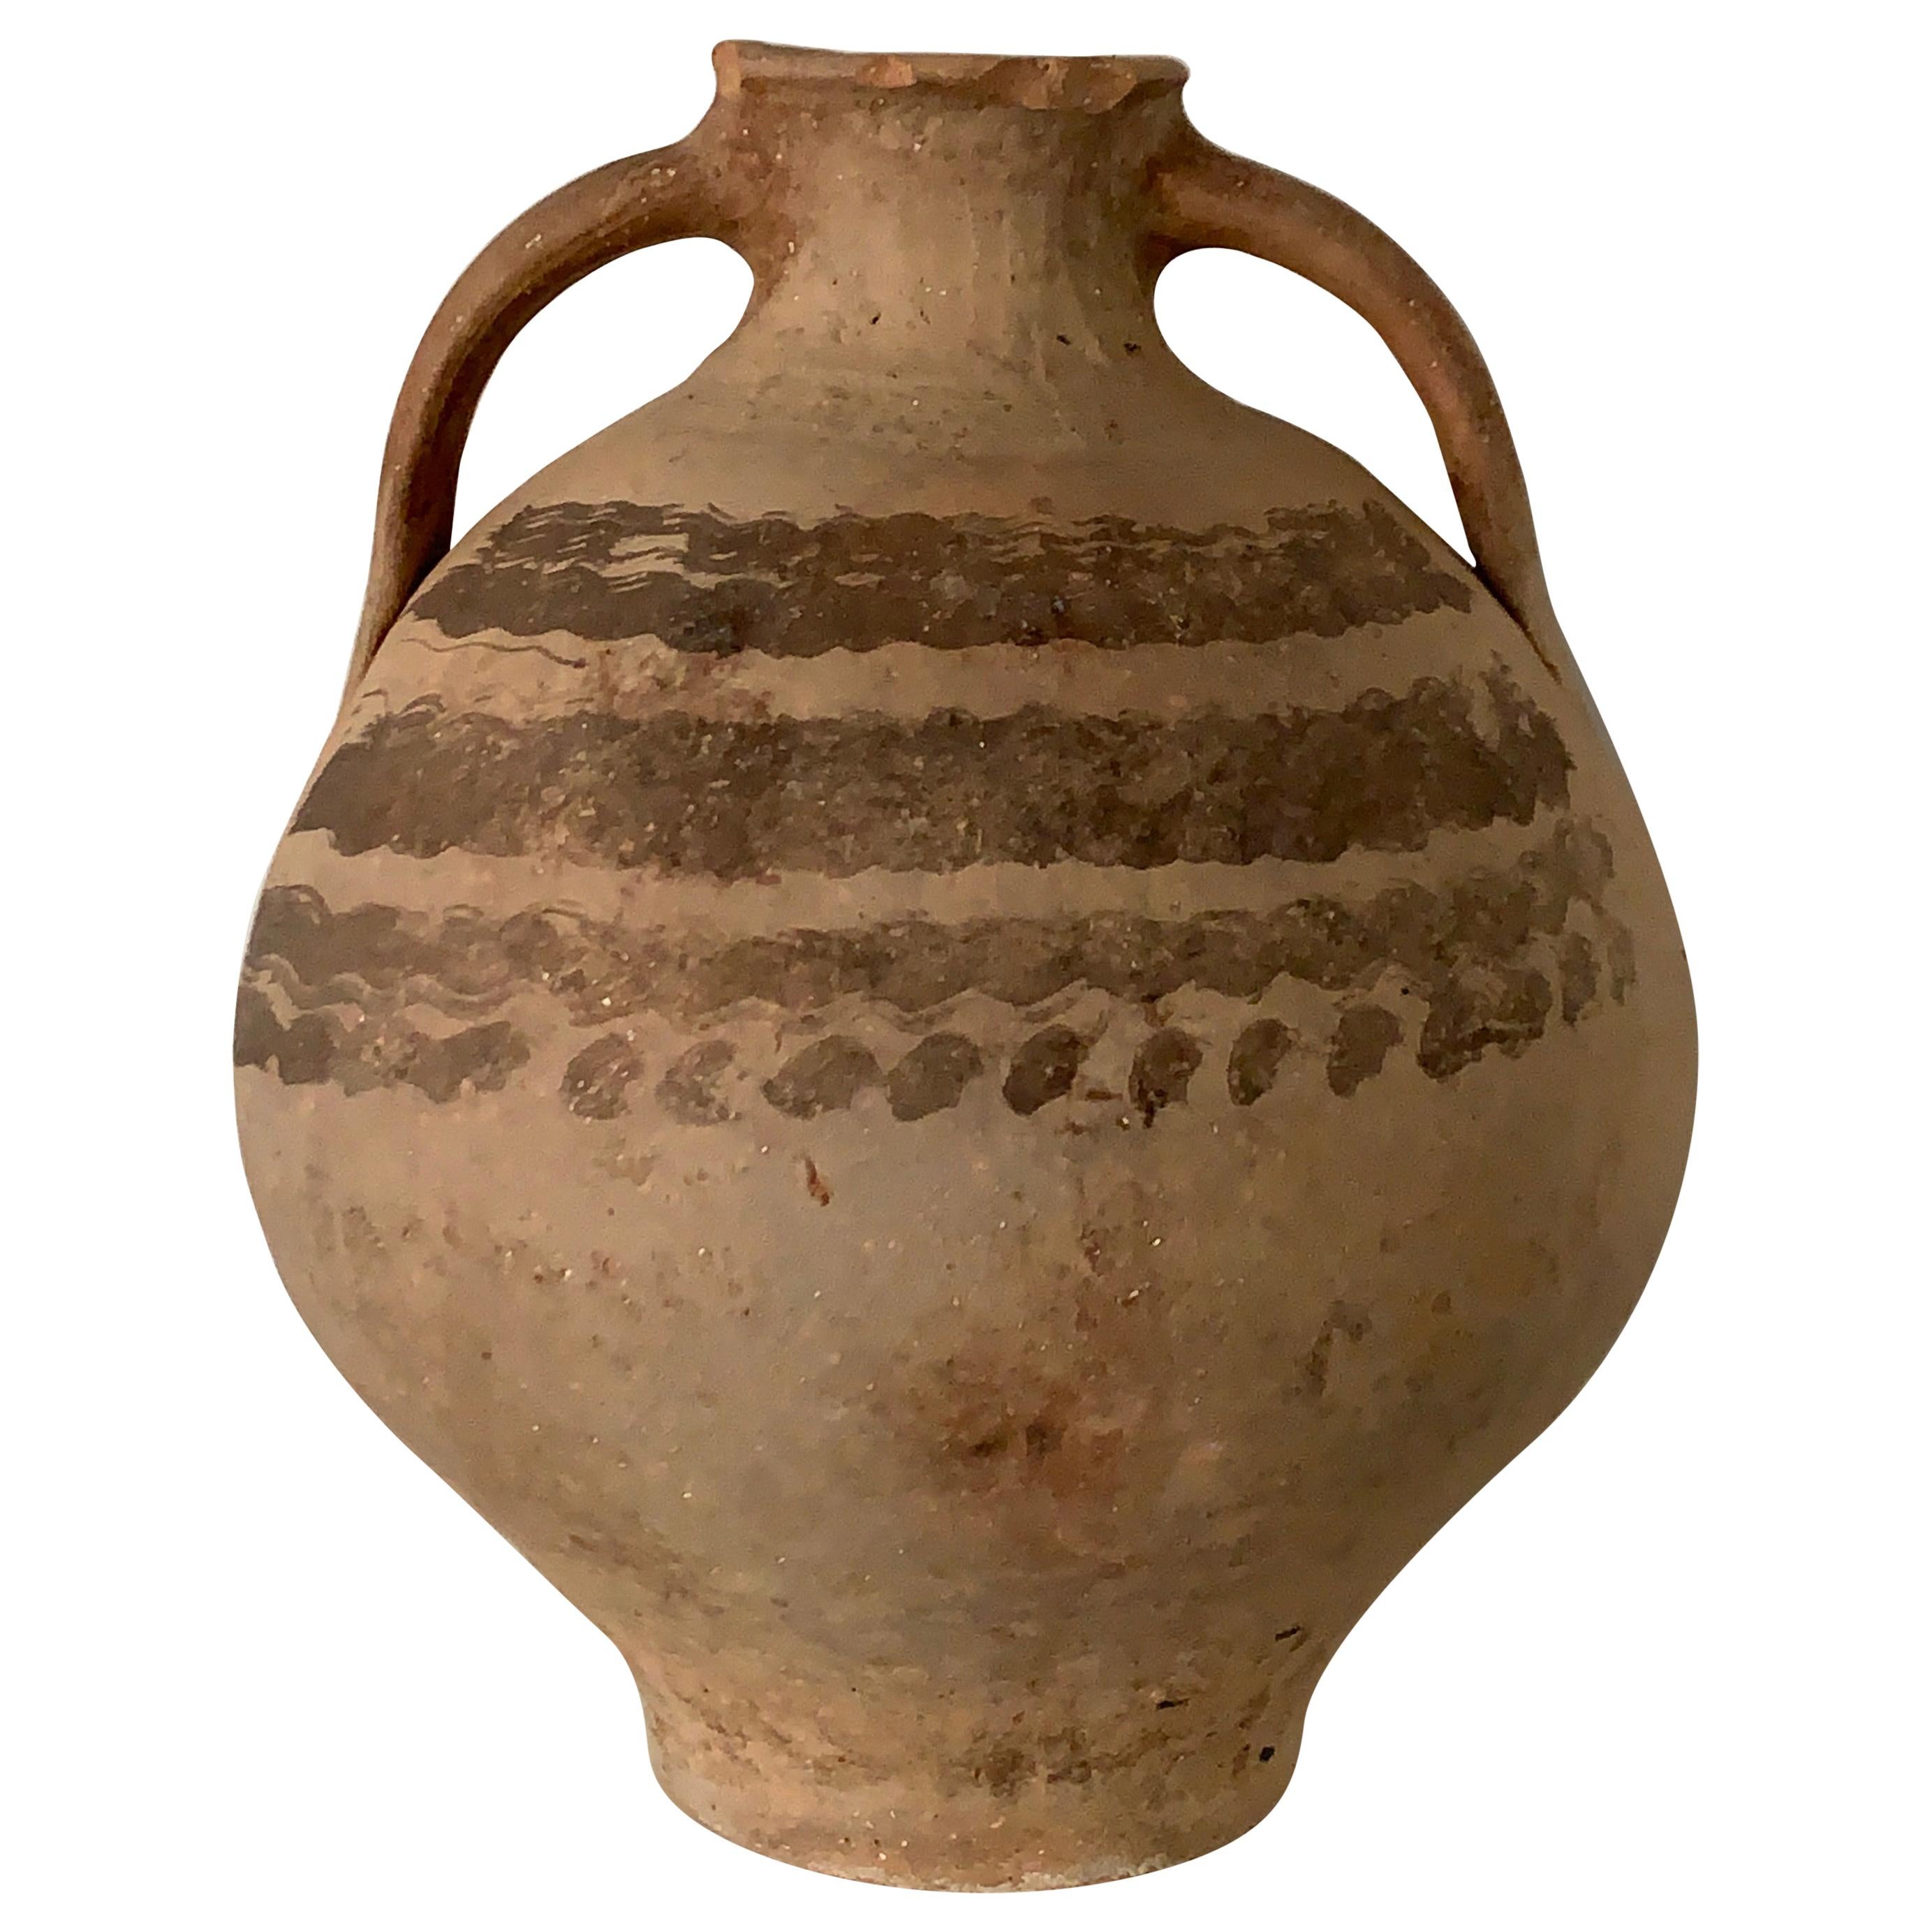 Brautkrug-Kicher „Cantaro“ aus Calanda, Spanien, Terrakotta-Vase, 18. Jahrhundert